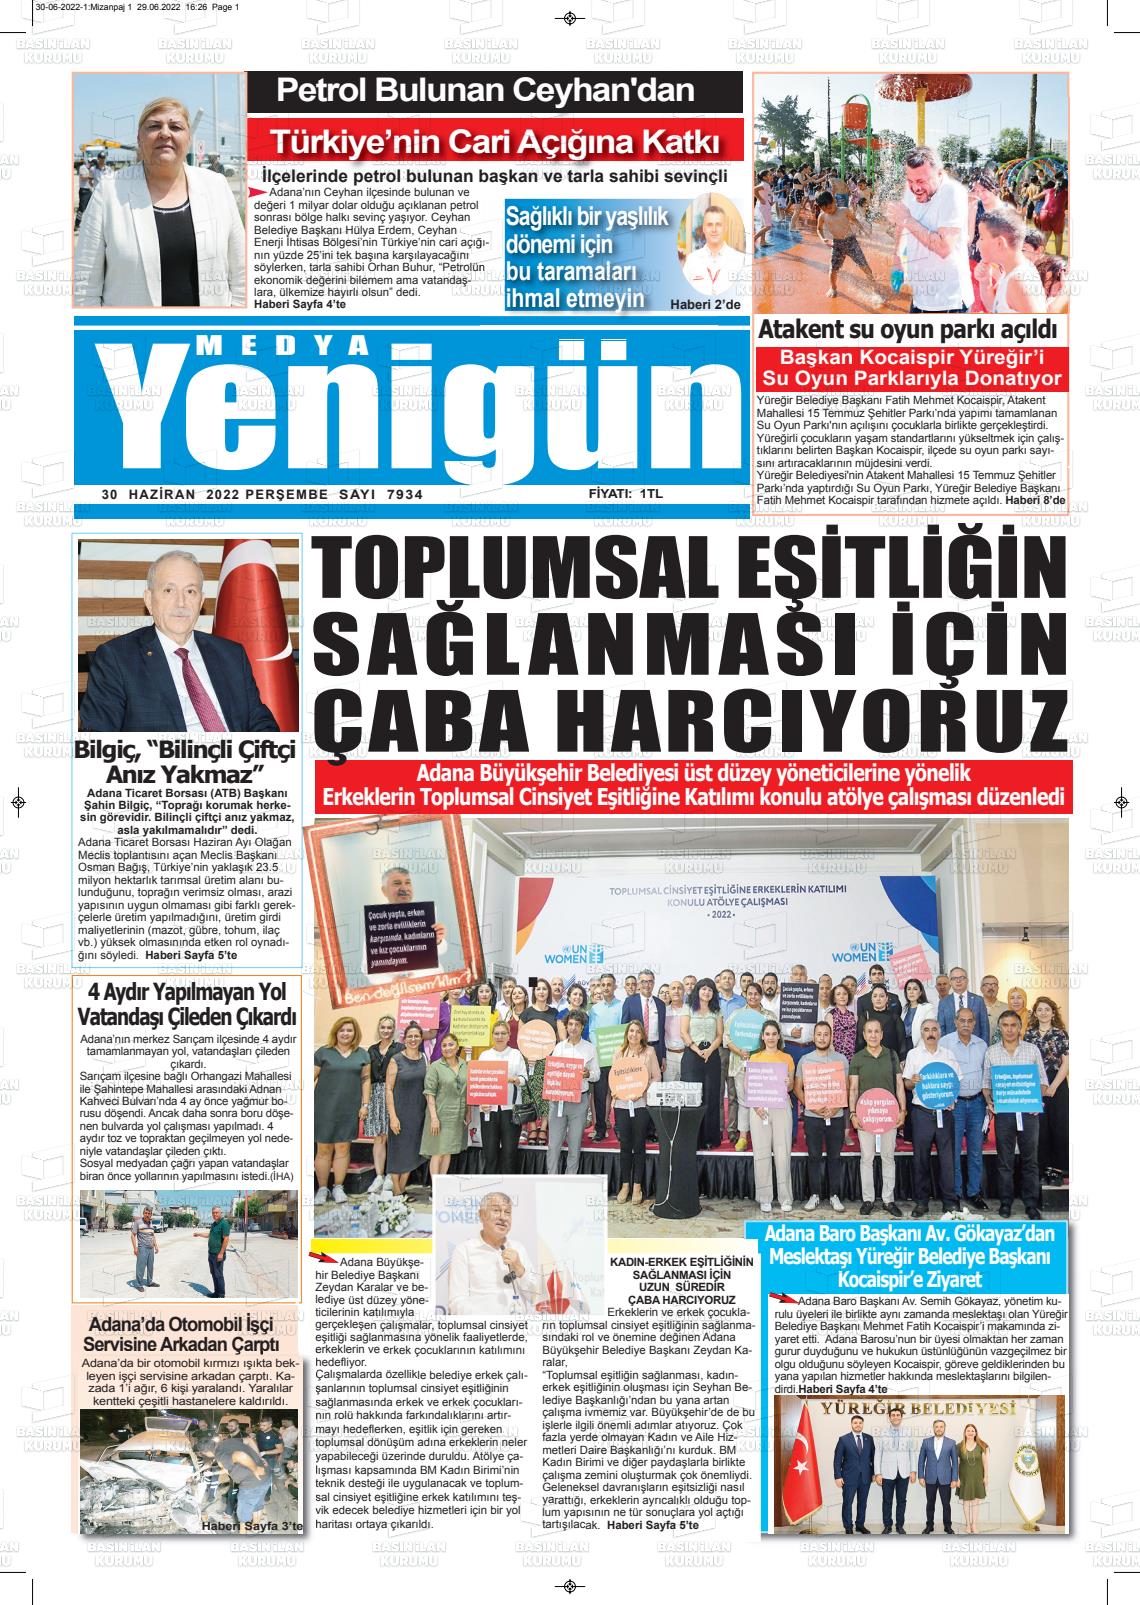 30 Haziran 2022 Medya Yenigün Gazete Manşeti